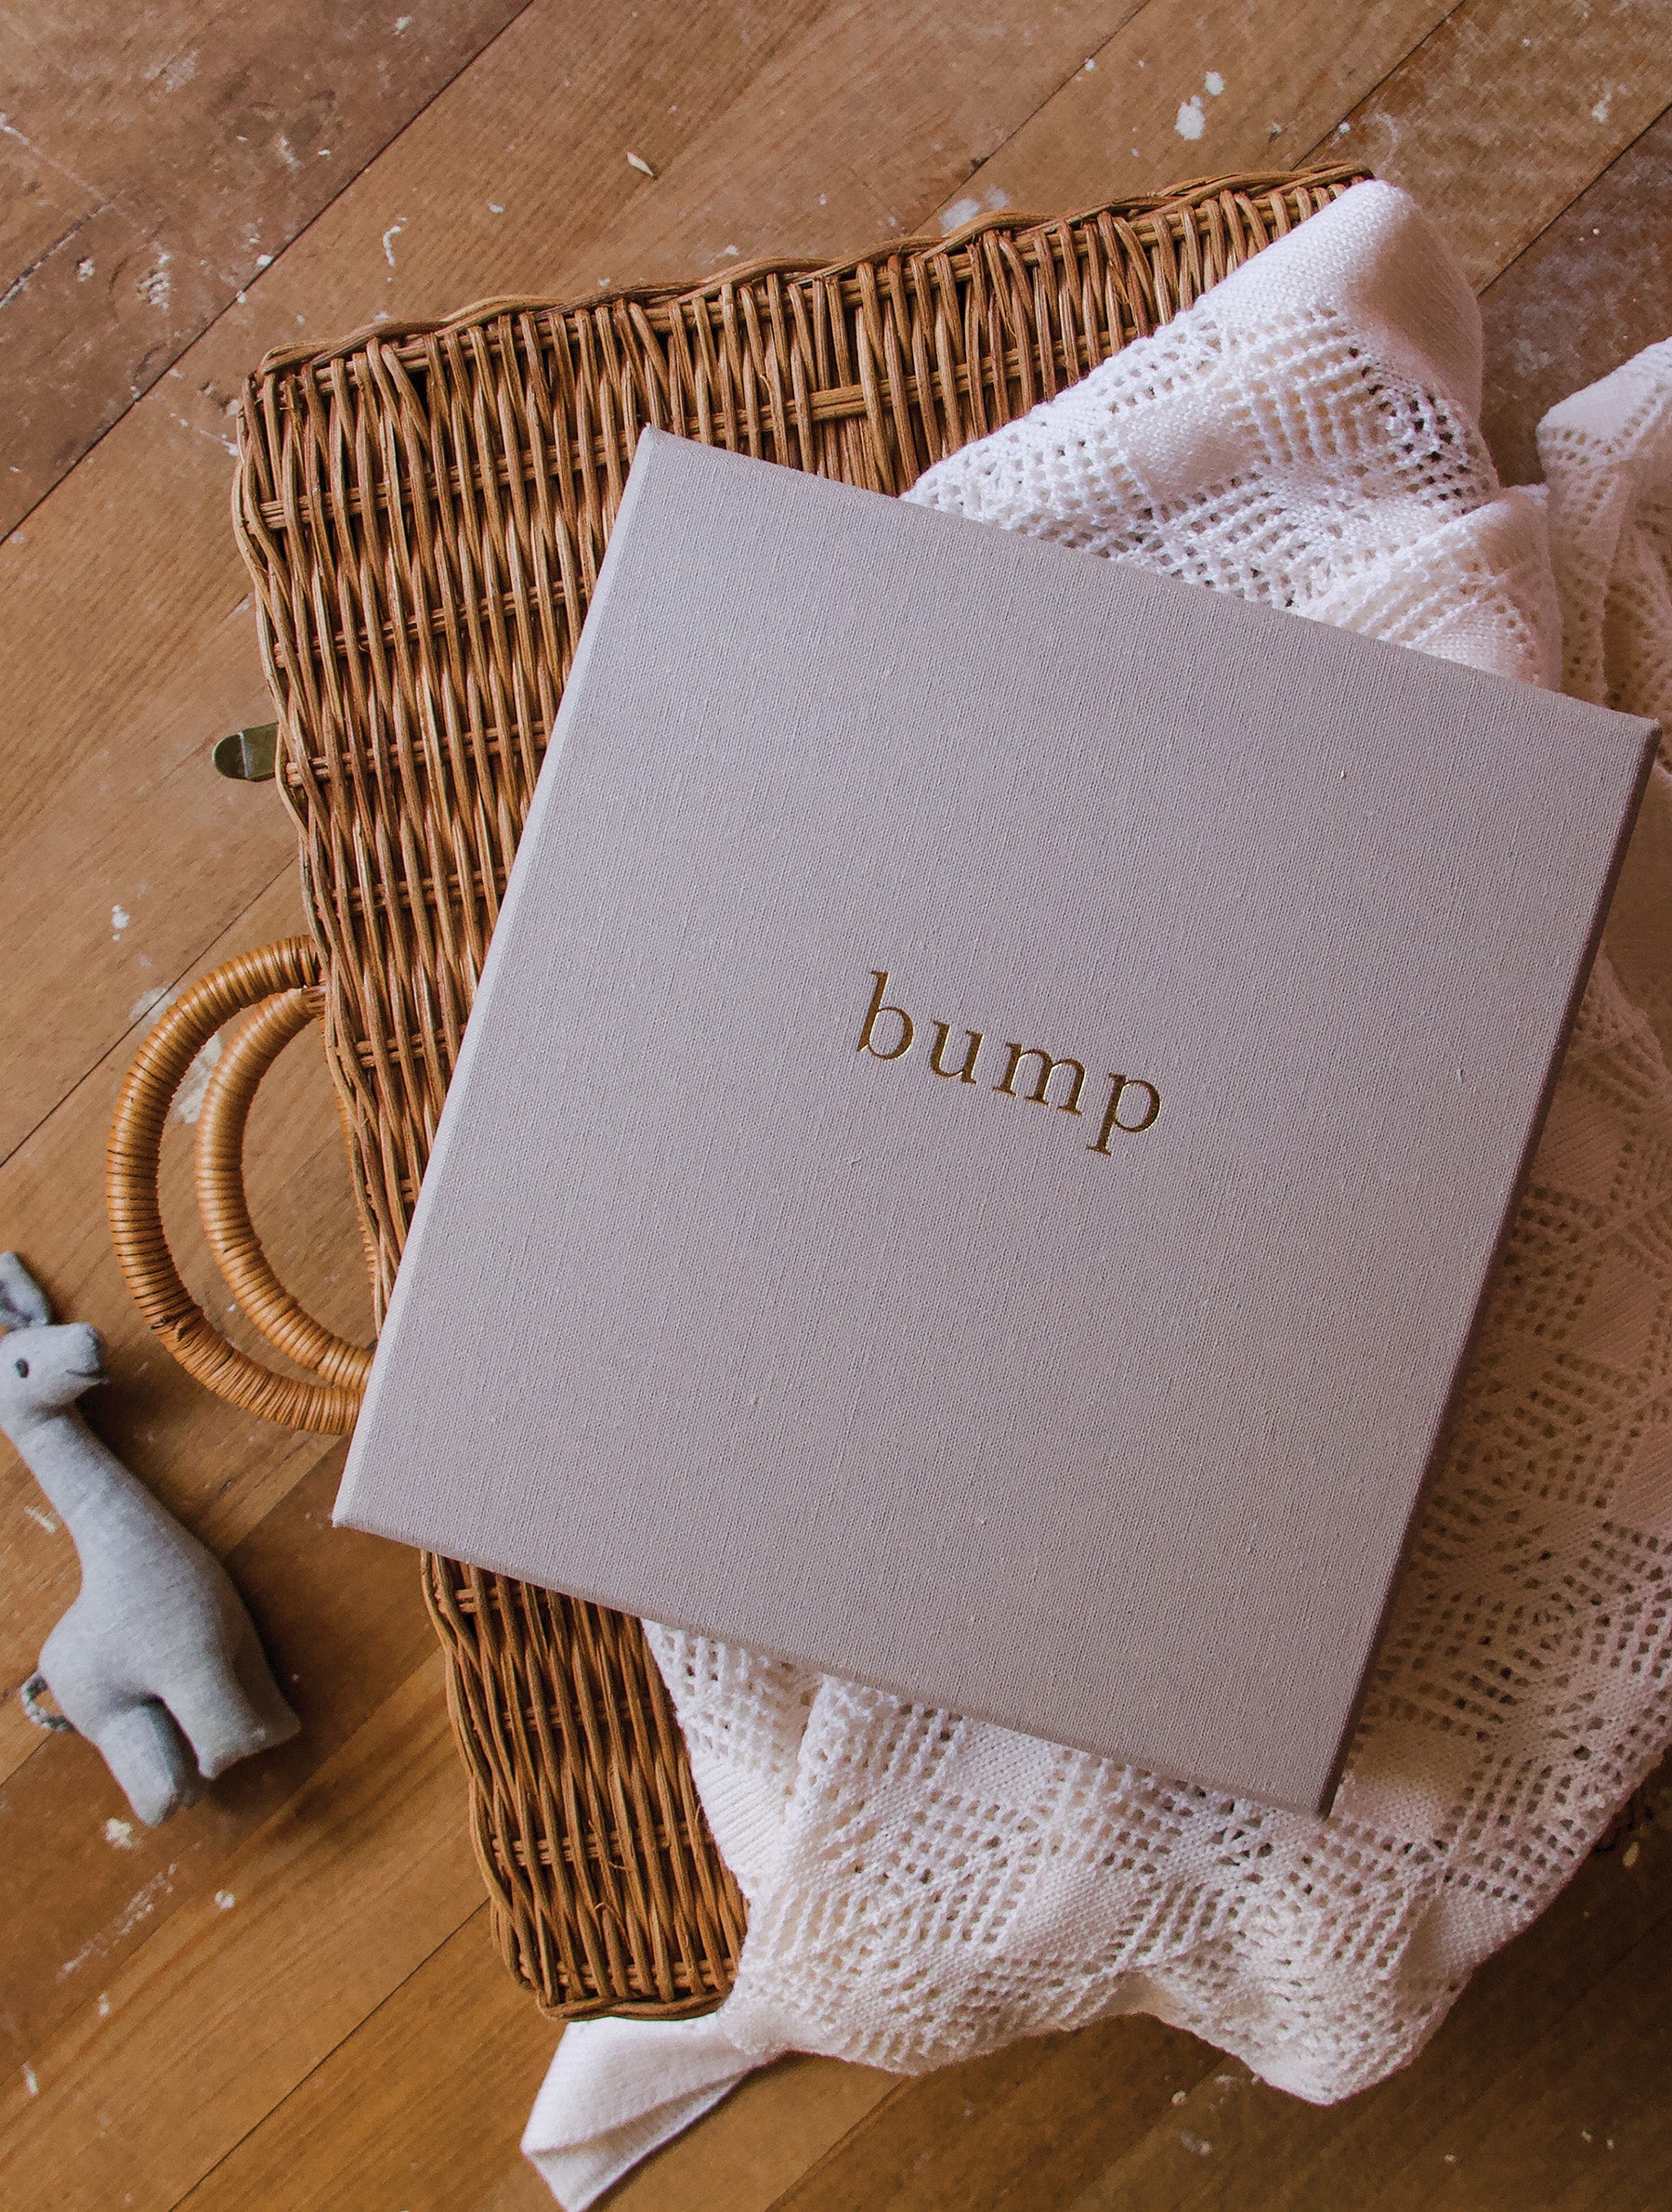 Write to Me | Bump. My Pregnancy Journal - Light Grey